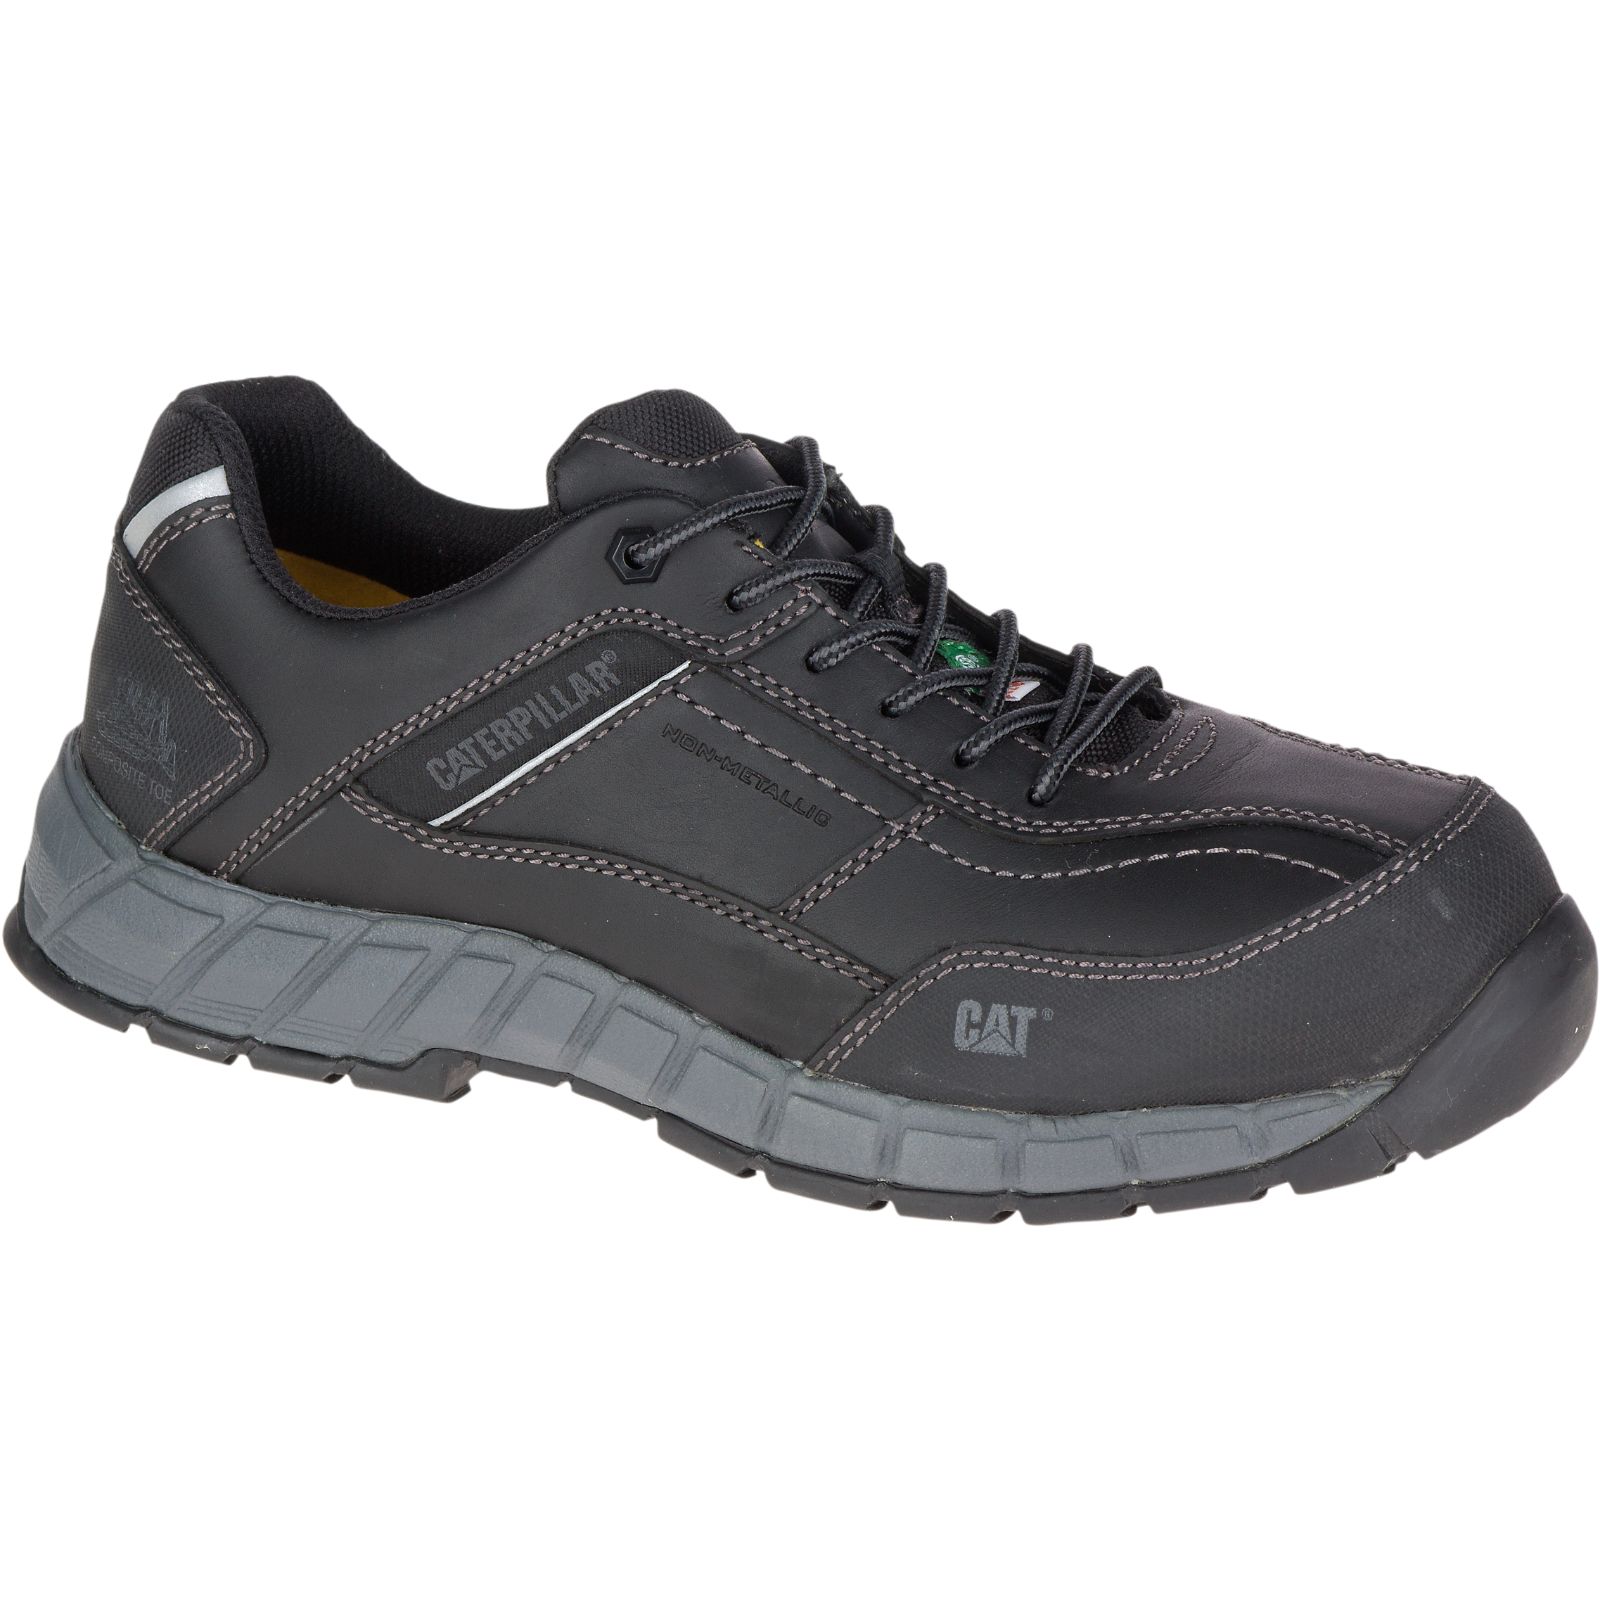 Caterpillar Shoes Online Pakistan - Caterpillar Streamline Leather Csa Composite Toe Mens Work Shoes Black (364795-EIZ)